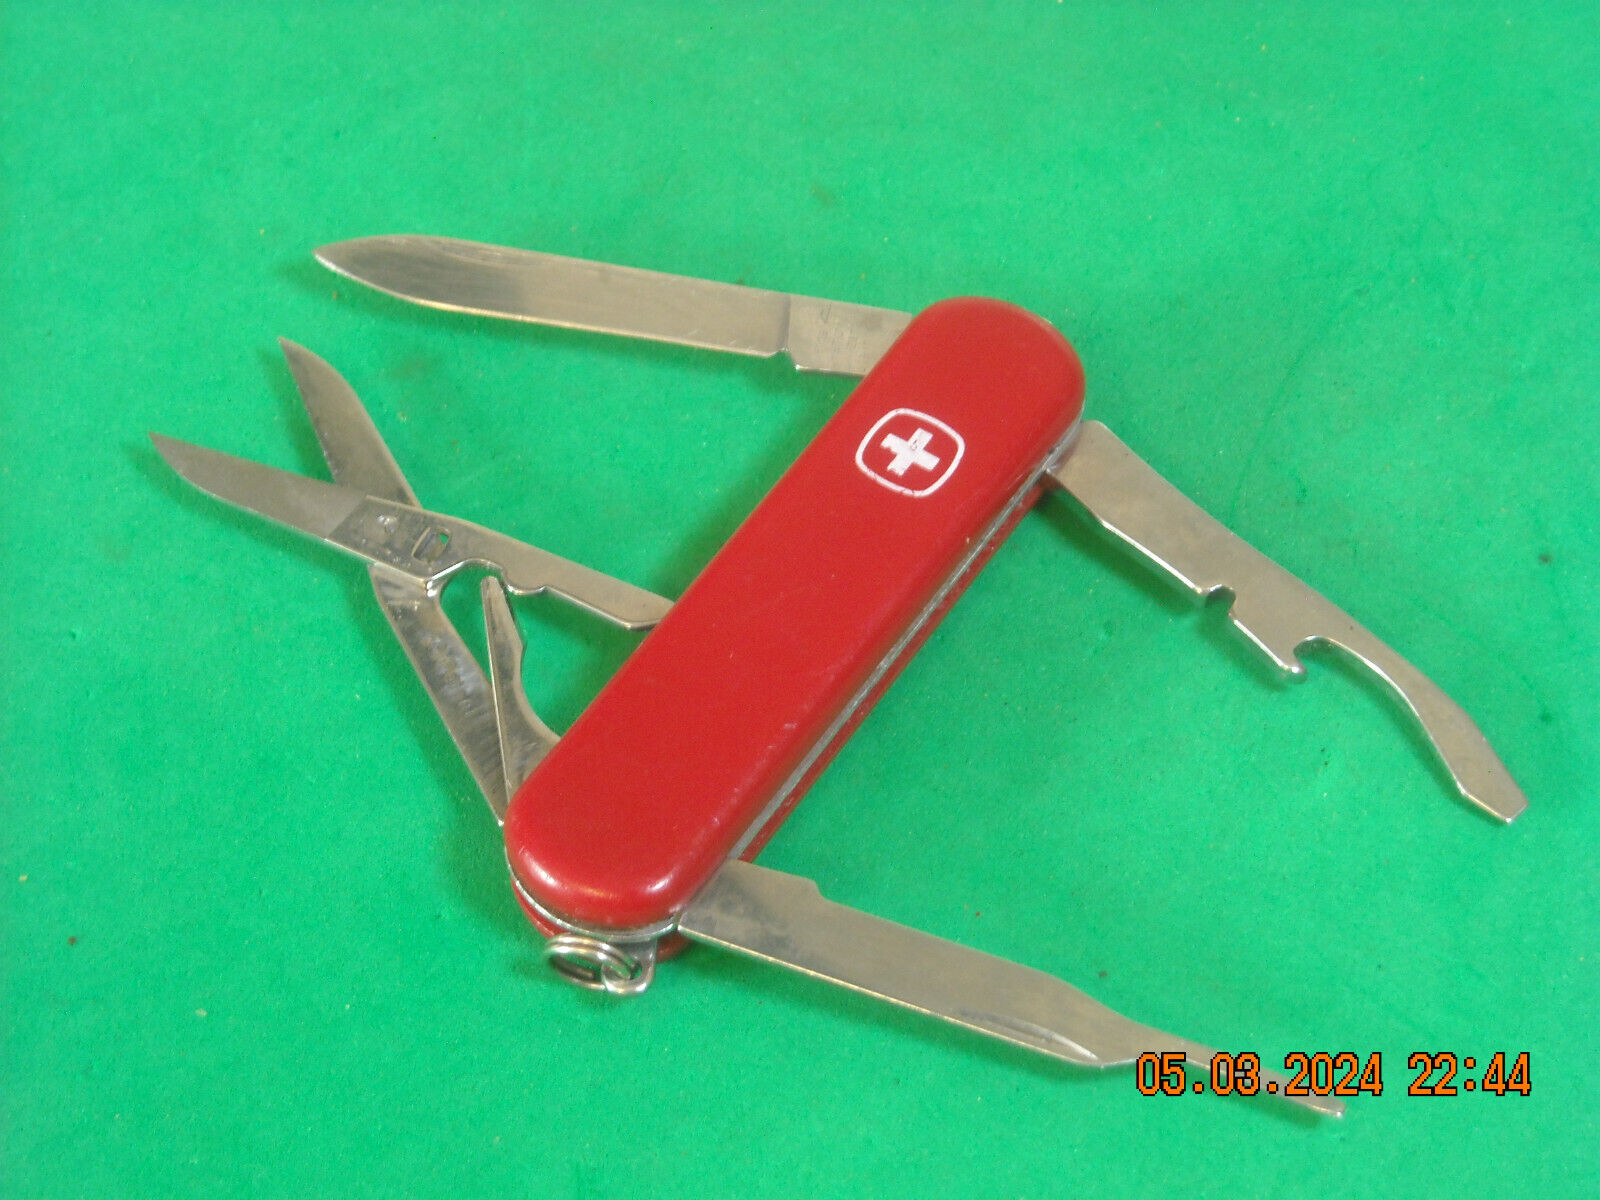 Wenger Pocket Tech Swiss Army Knife